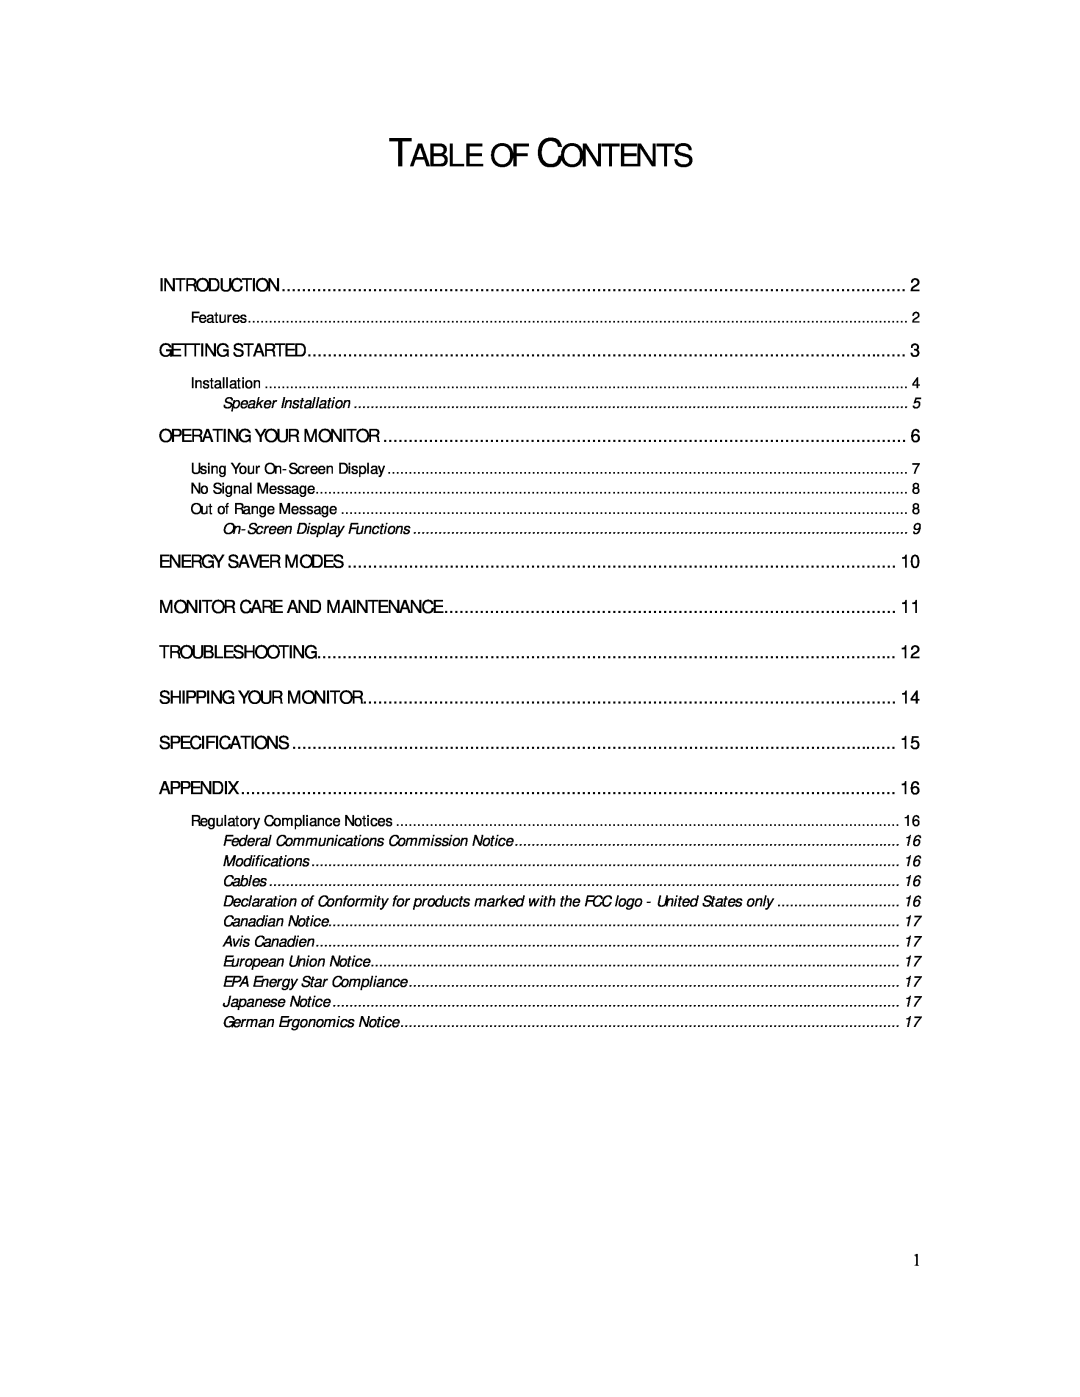 Compaq 740 manual Table Of Contents 